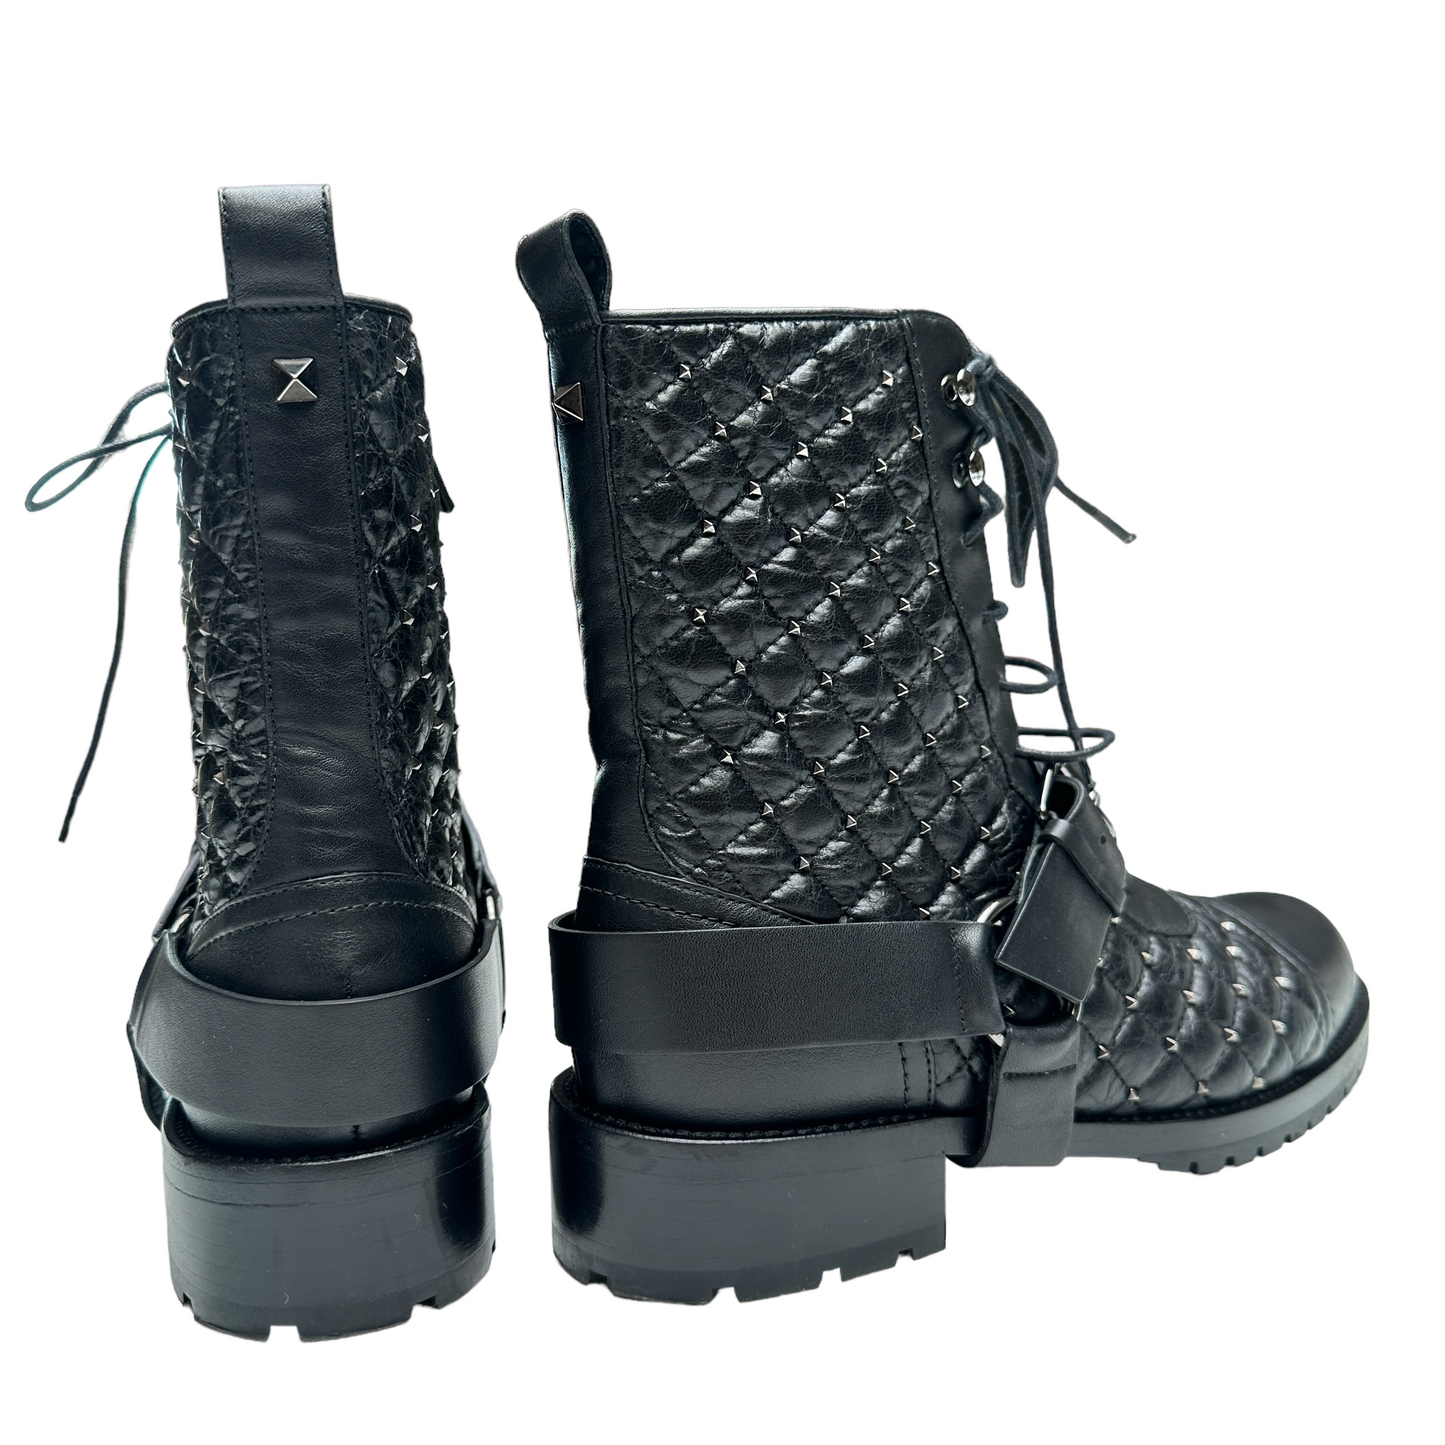 Black Studded Combat Boots - 8.5